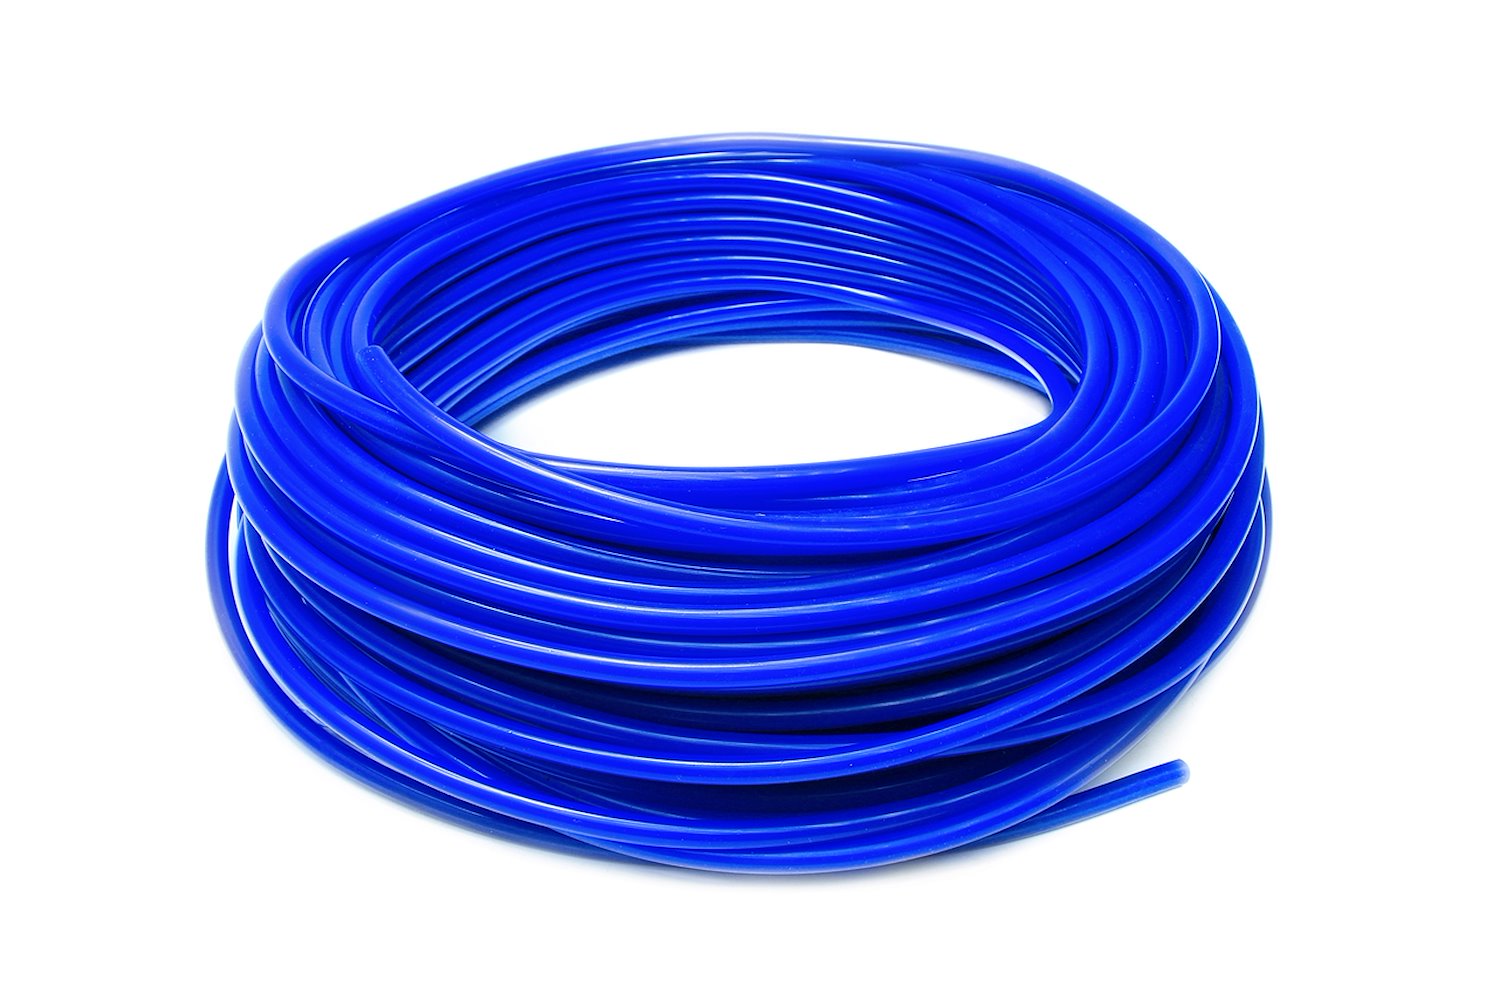 HTSVH7-BLUEx50 High-Temperature Silicone Vacuum Hose Tubing, 9/32 in. ID, 50 ft. Roll, Blue